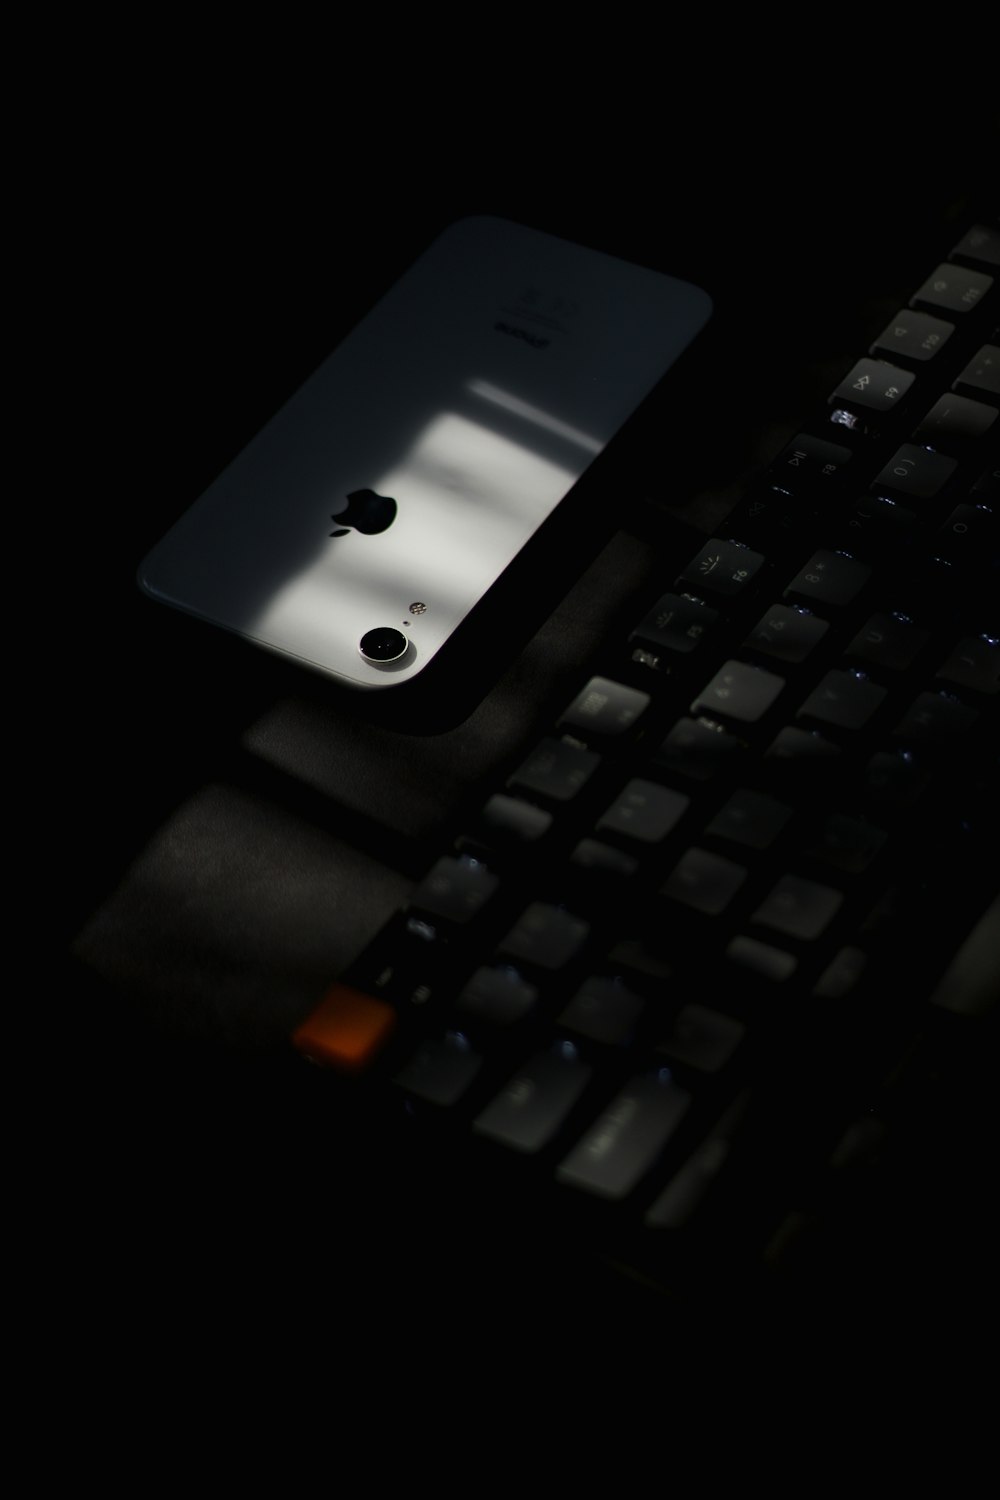 white iphone 4 on black computer keyboard